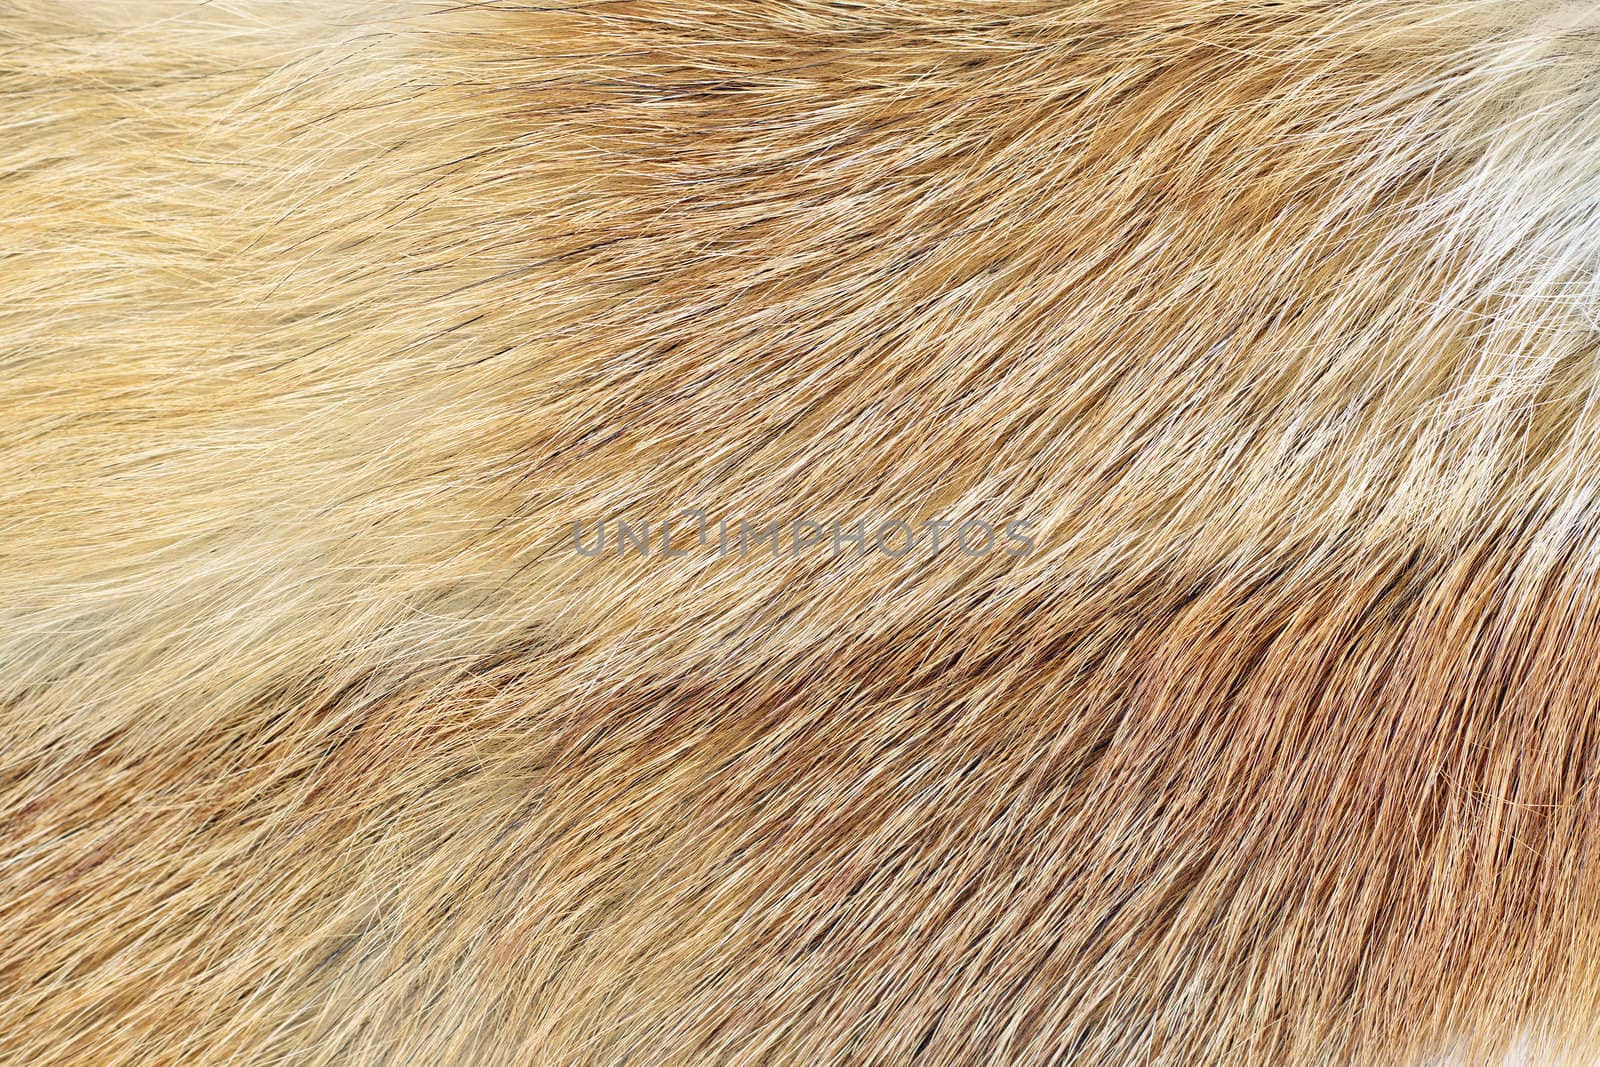 Mink (Mustela lutreola) fur background by Jaykayl